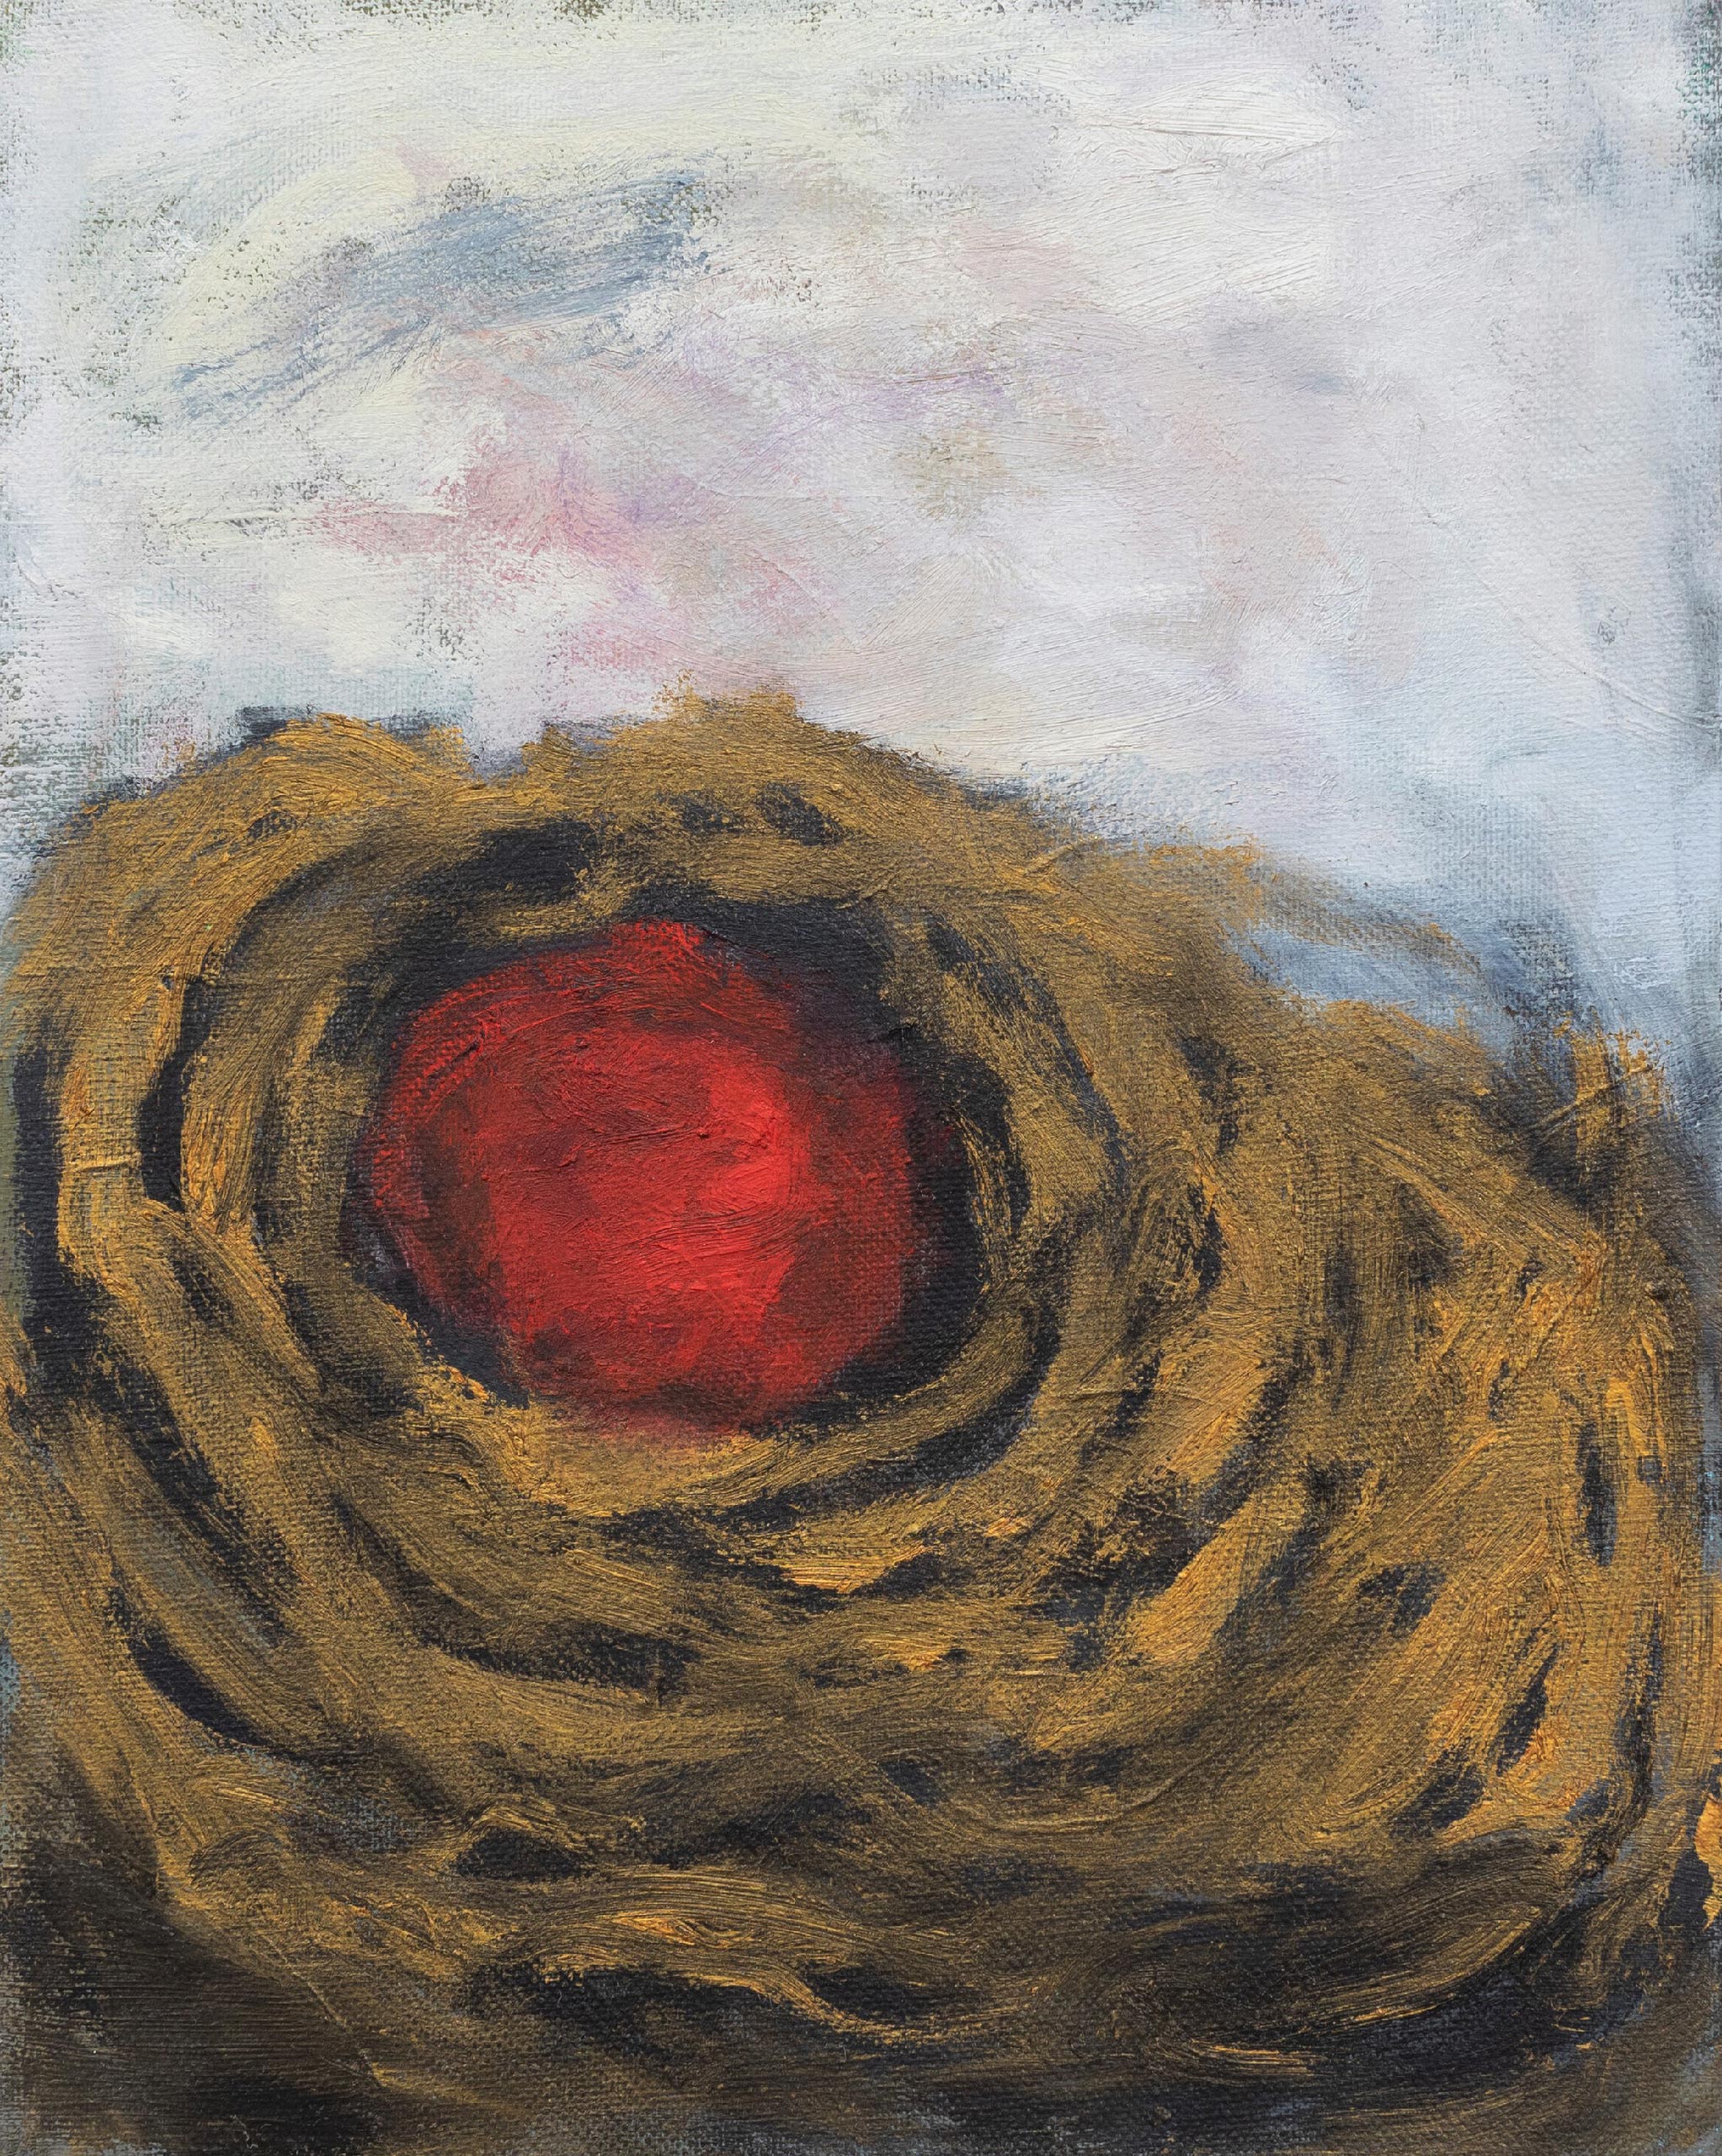 Sky singing, Oil on canvas, 2020, 30 × 24 cm